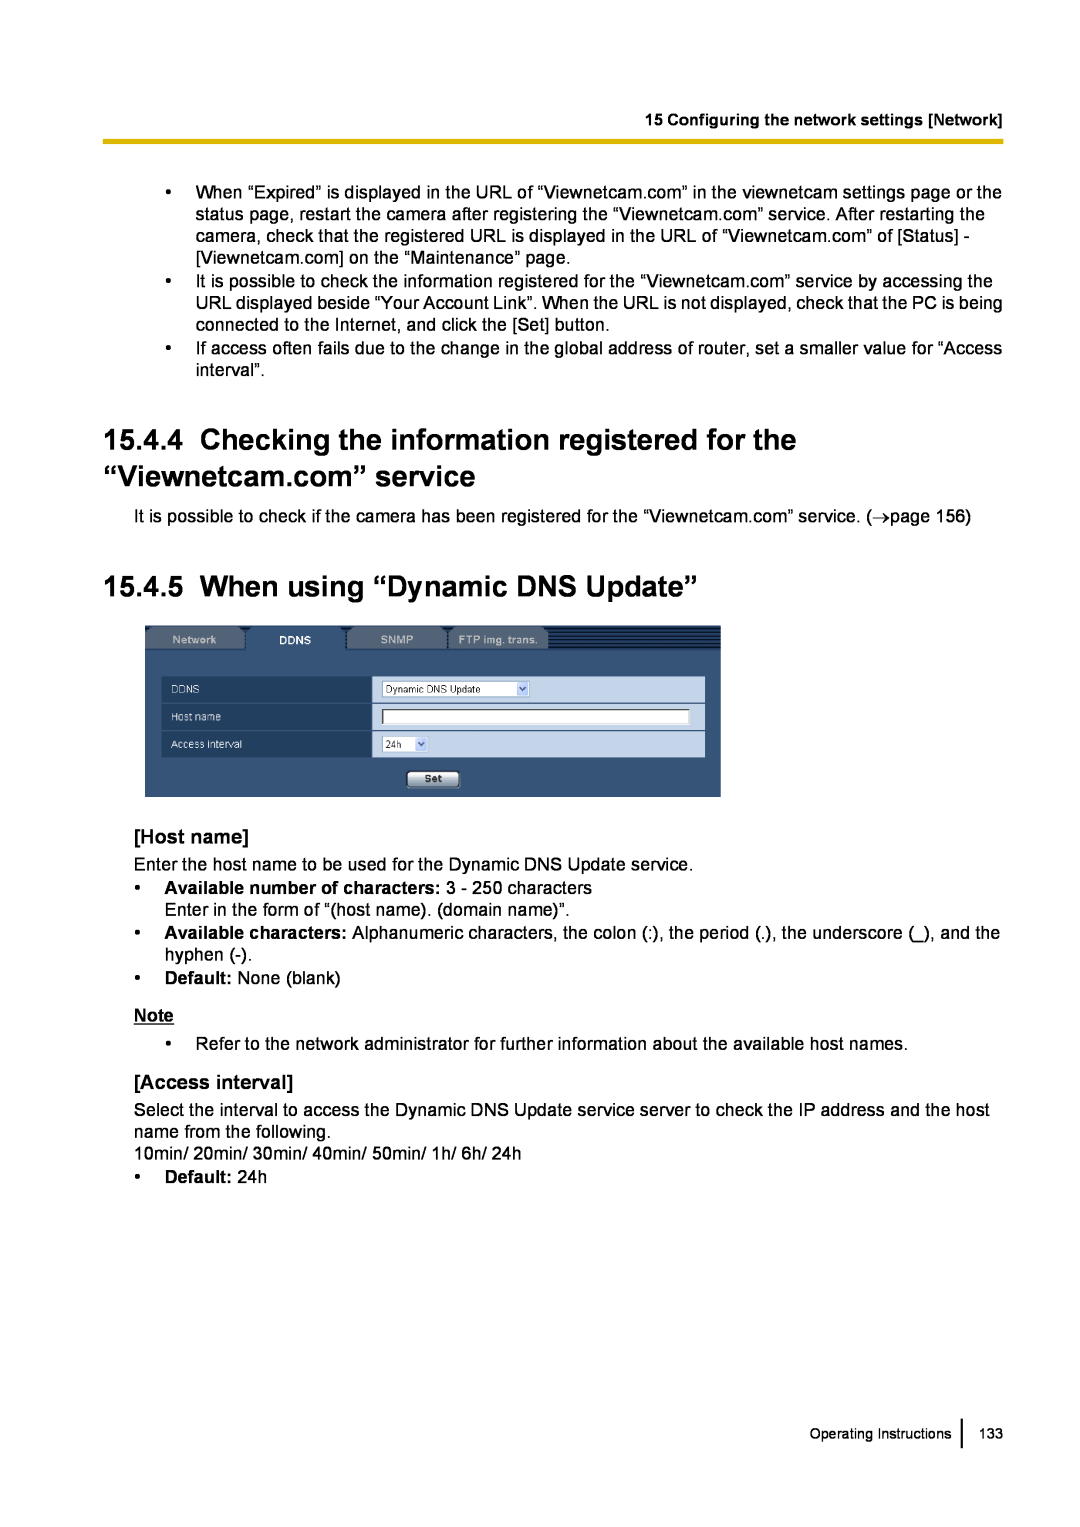 Panasonic BL-VT164W, BL-VP104W, BL-VP100 manual When using “Dynamic DNS Update”, Host name, Access interval, •Default: 24h 